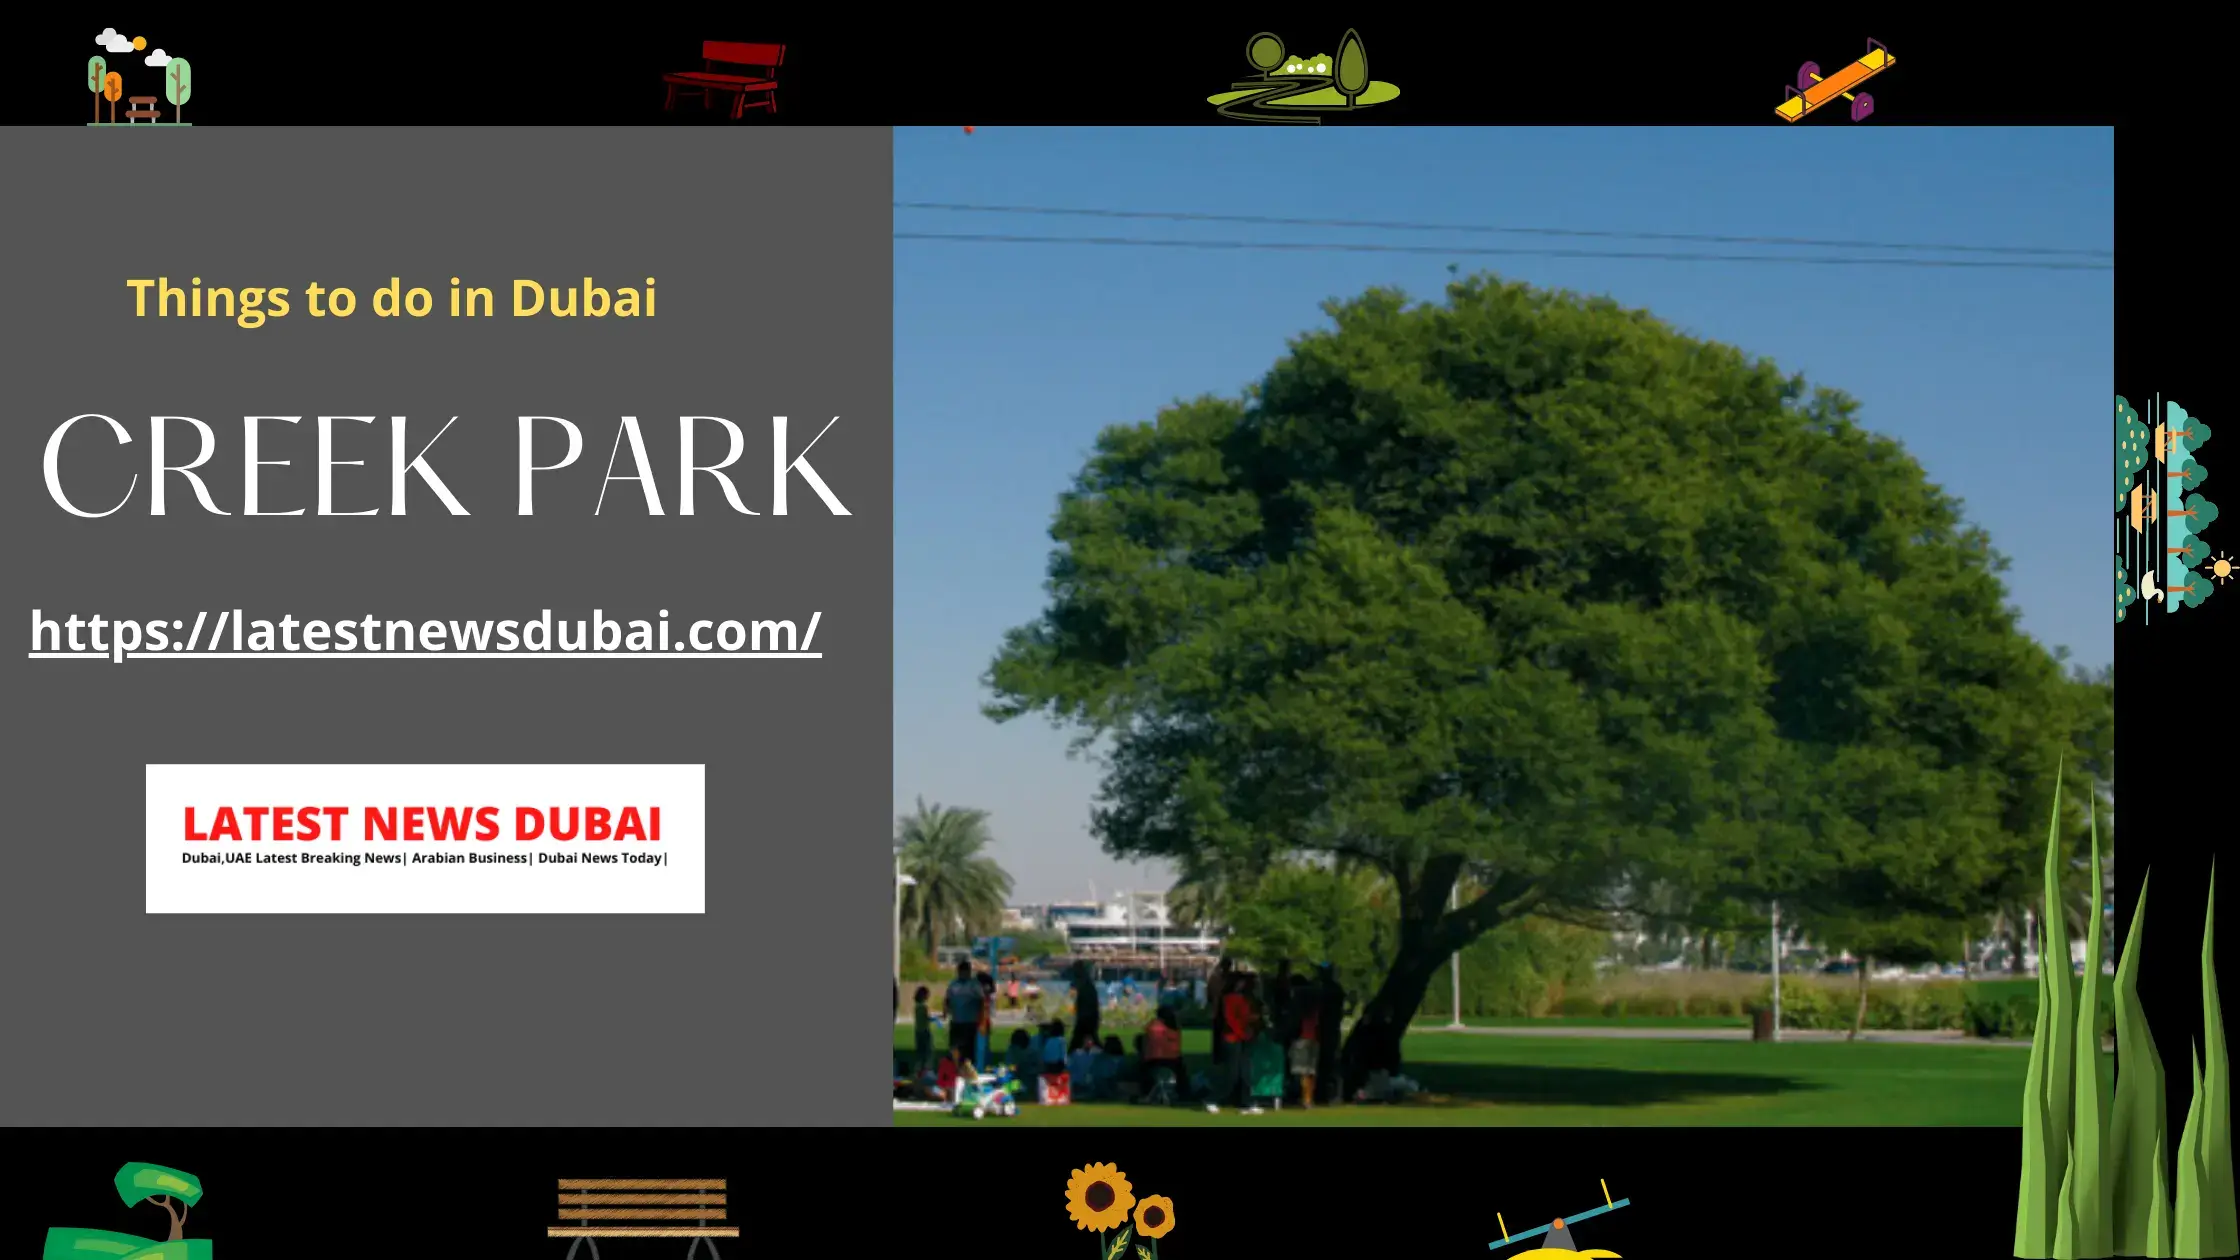 Explore Dubai Creek Park